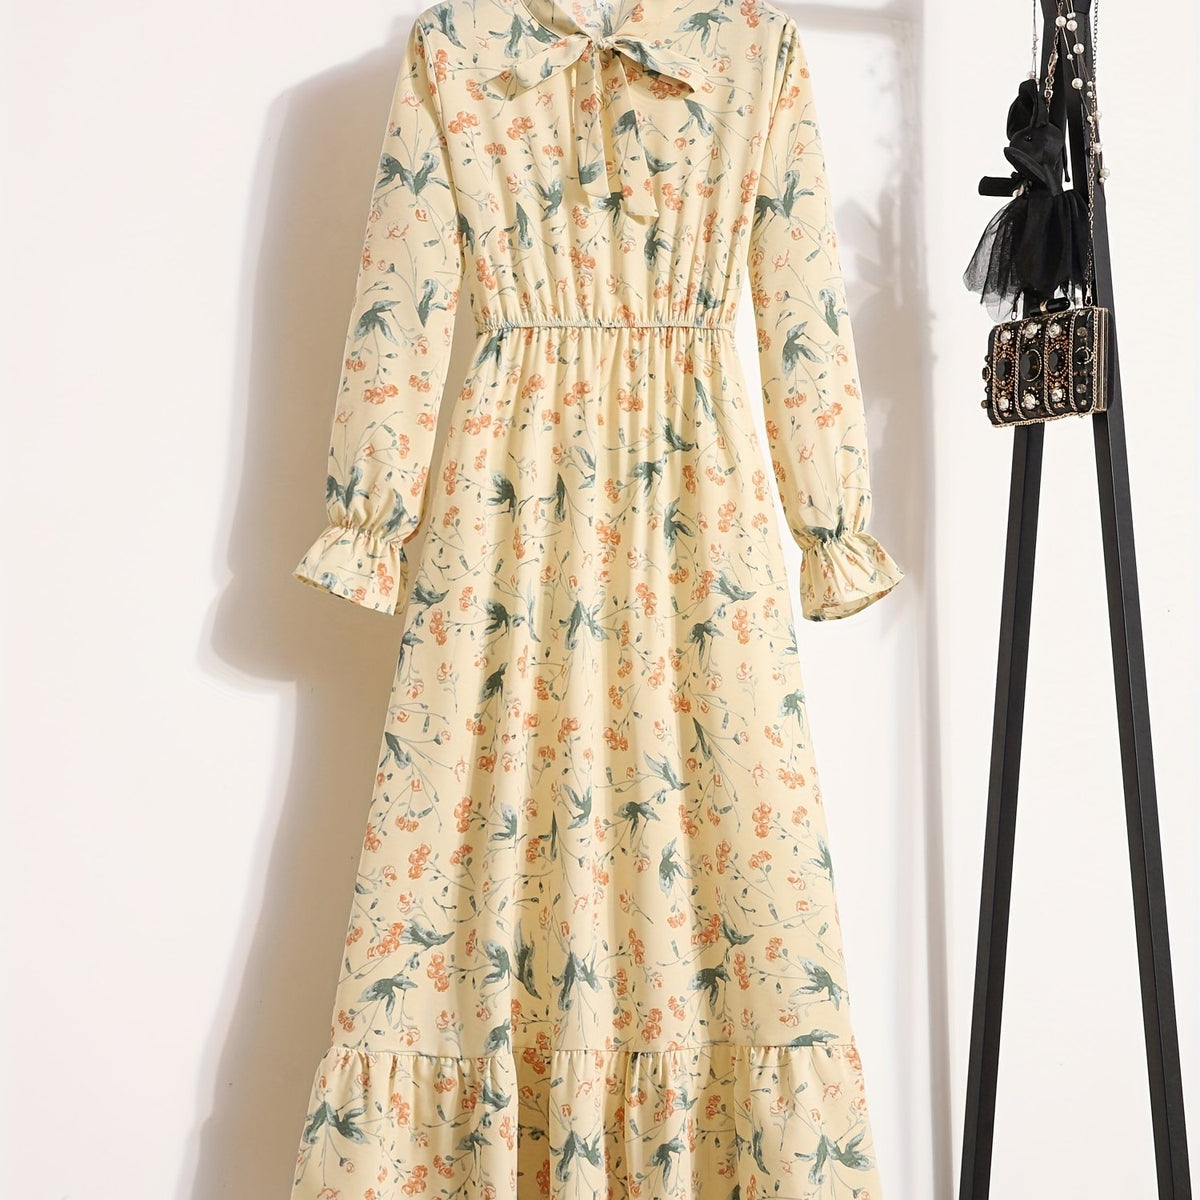 vlovelaw Floral Print Tie Neck Dress, Vintage Long Sleeve A Line Dress, Women's Clothing